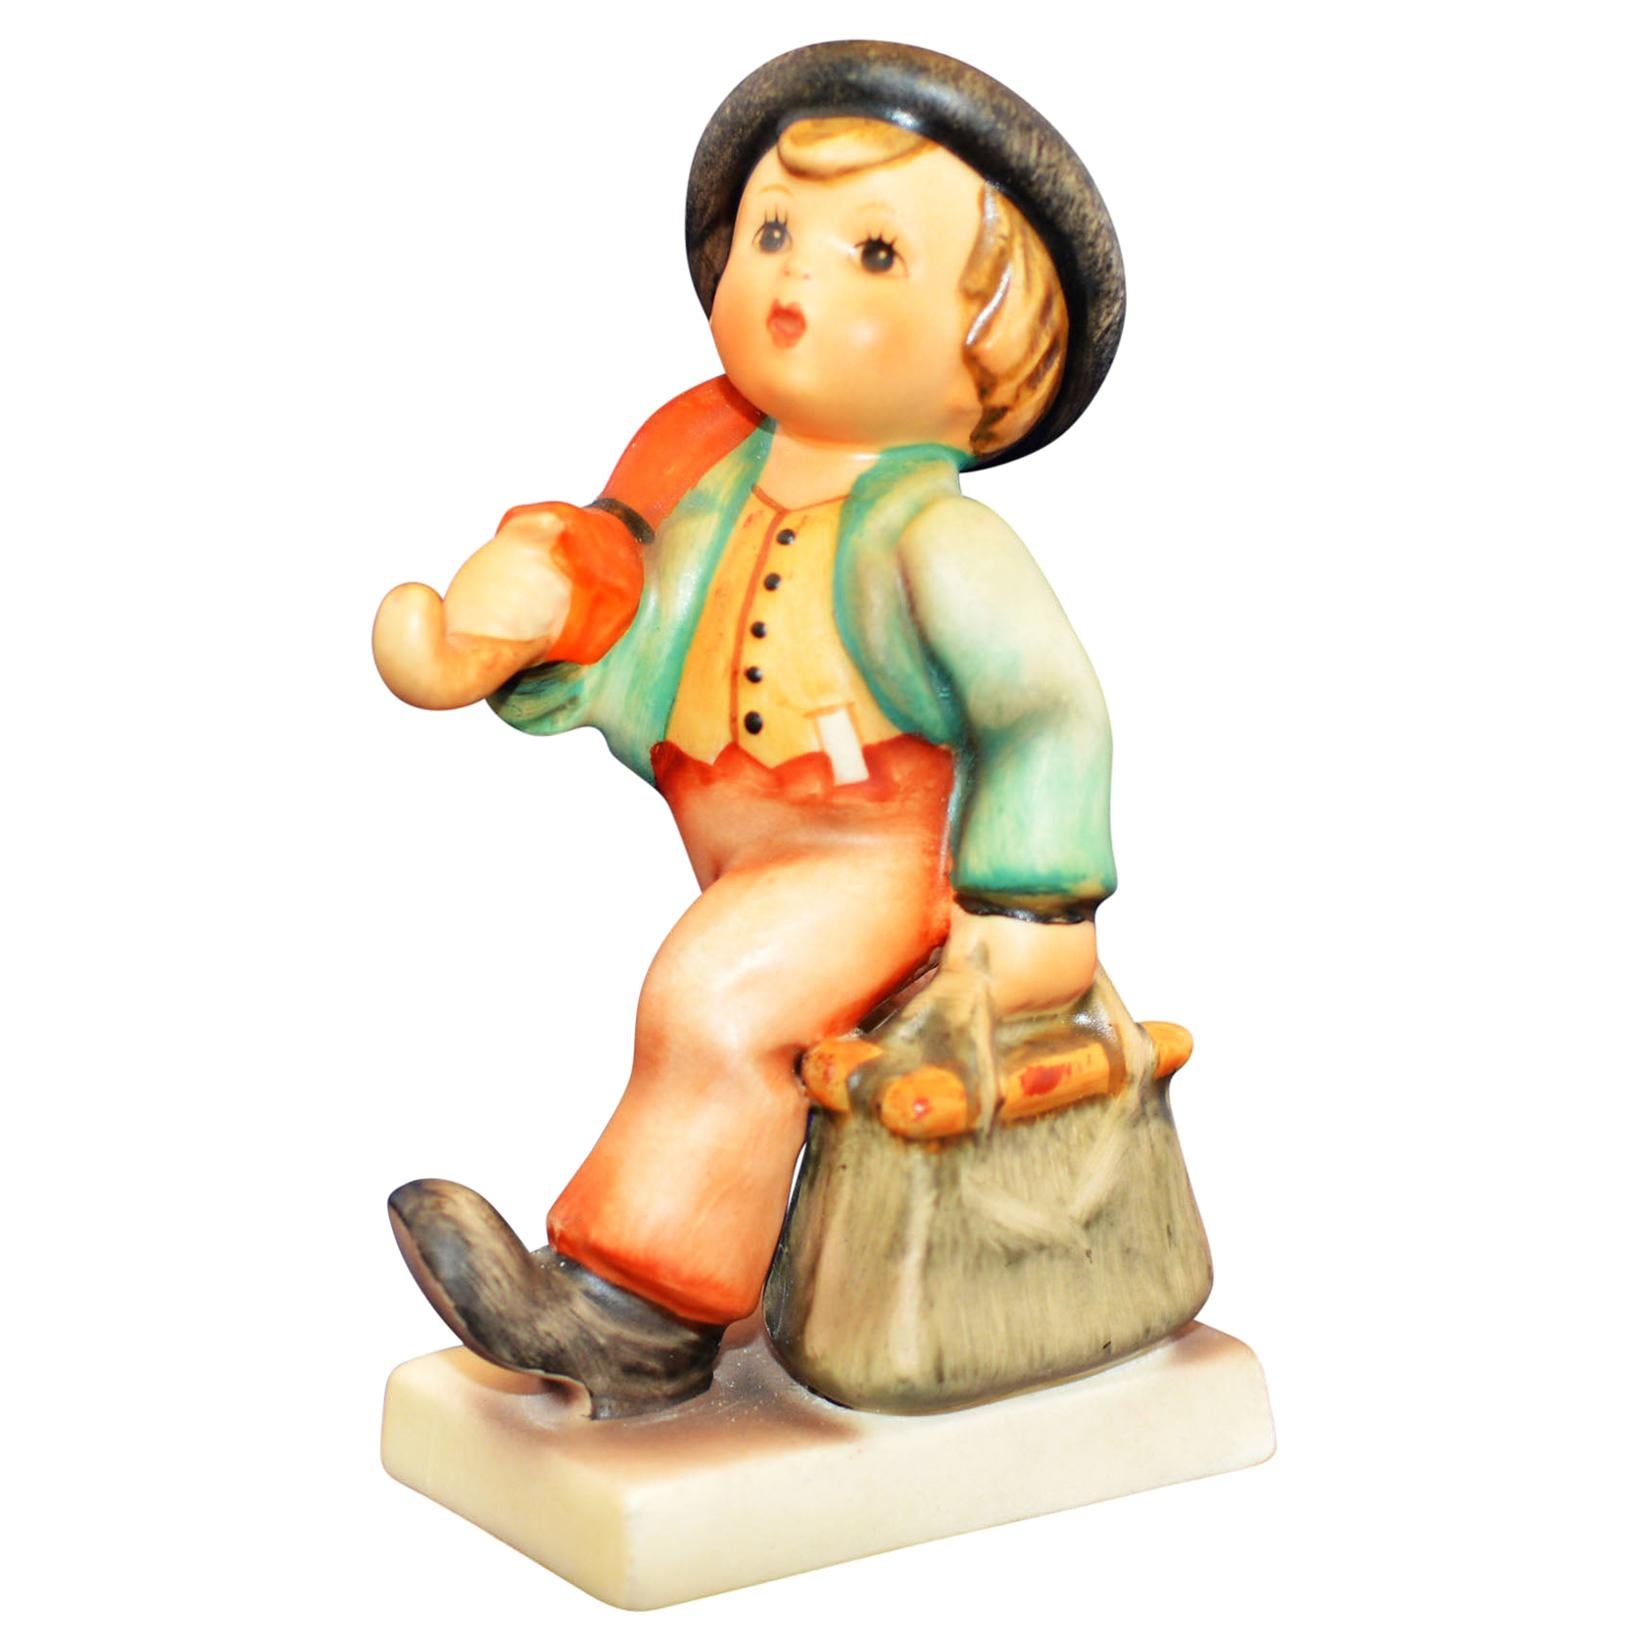 Hummel Merry Wanderer Figurine For Sale